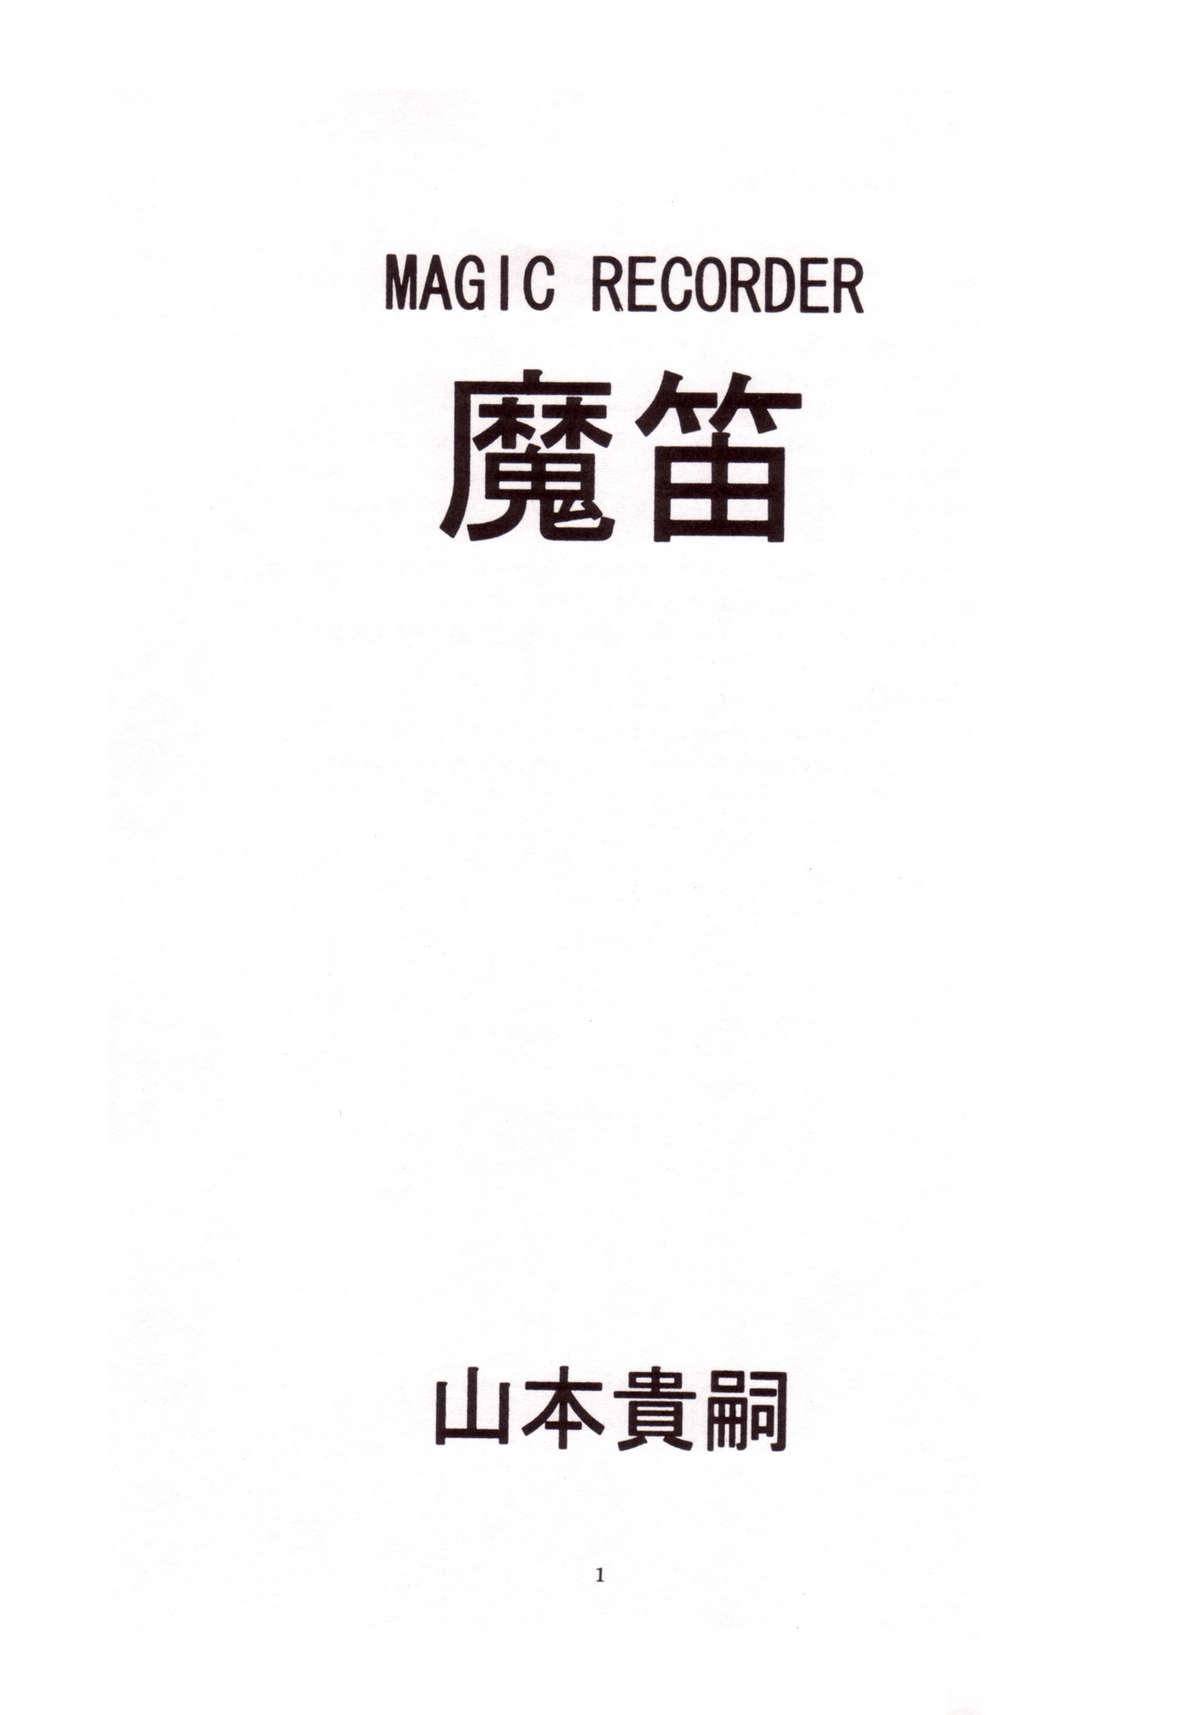 Hungarian Magic Recorder Flashing - Page 2